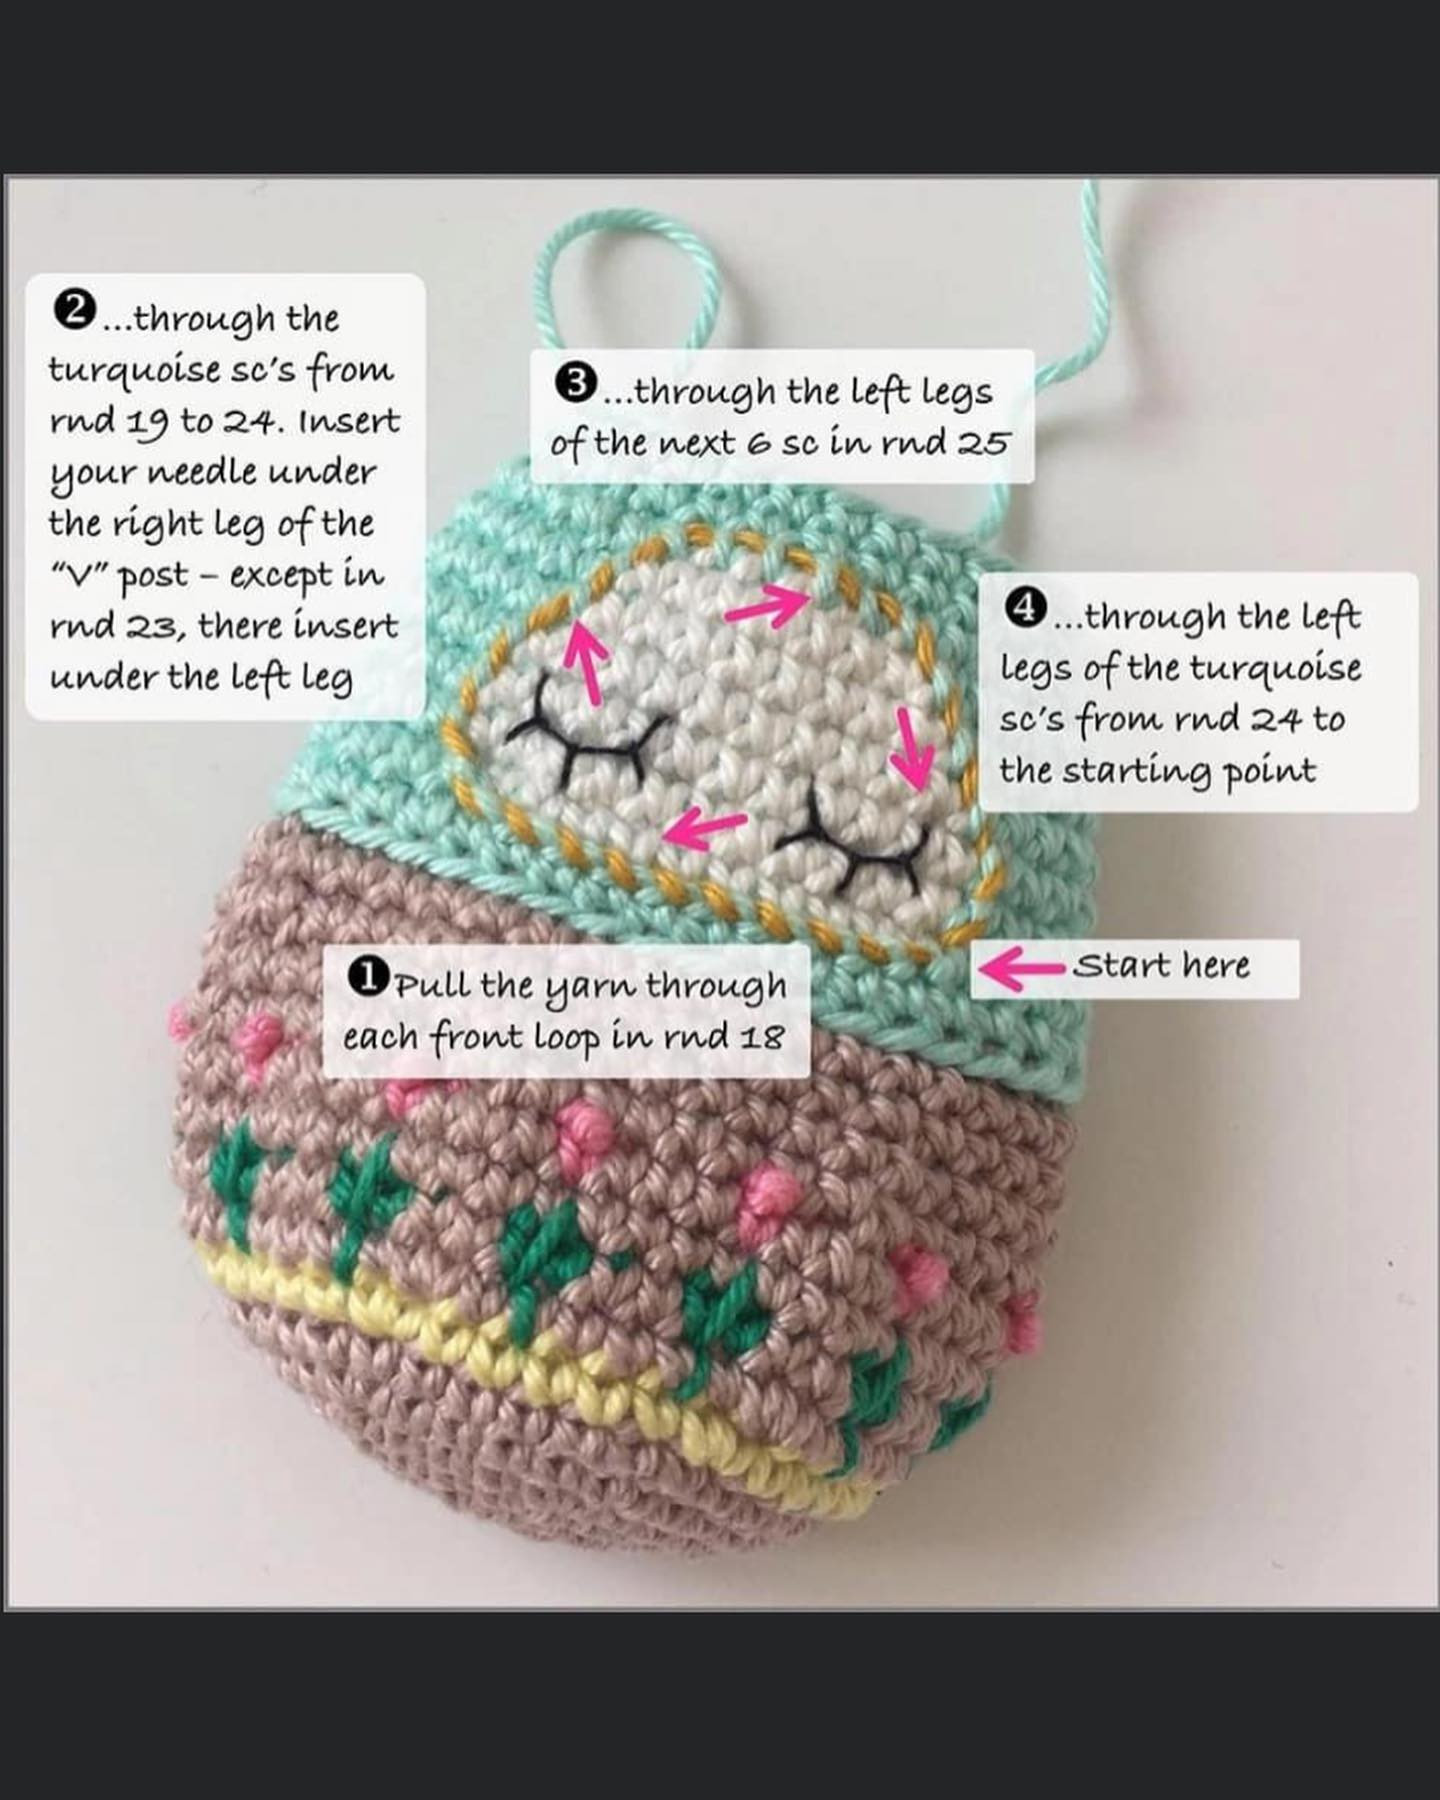 free crochet pattern spring matryoshka